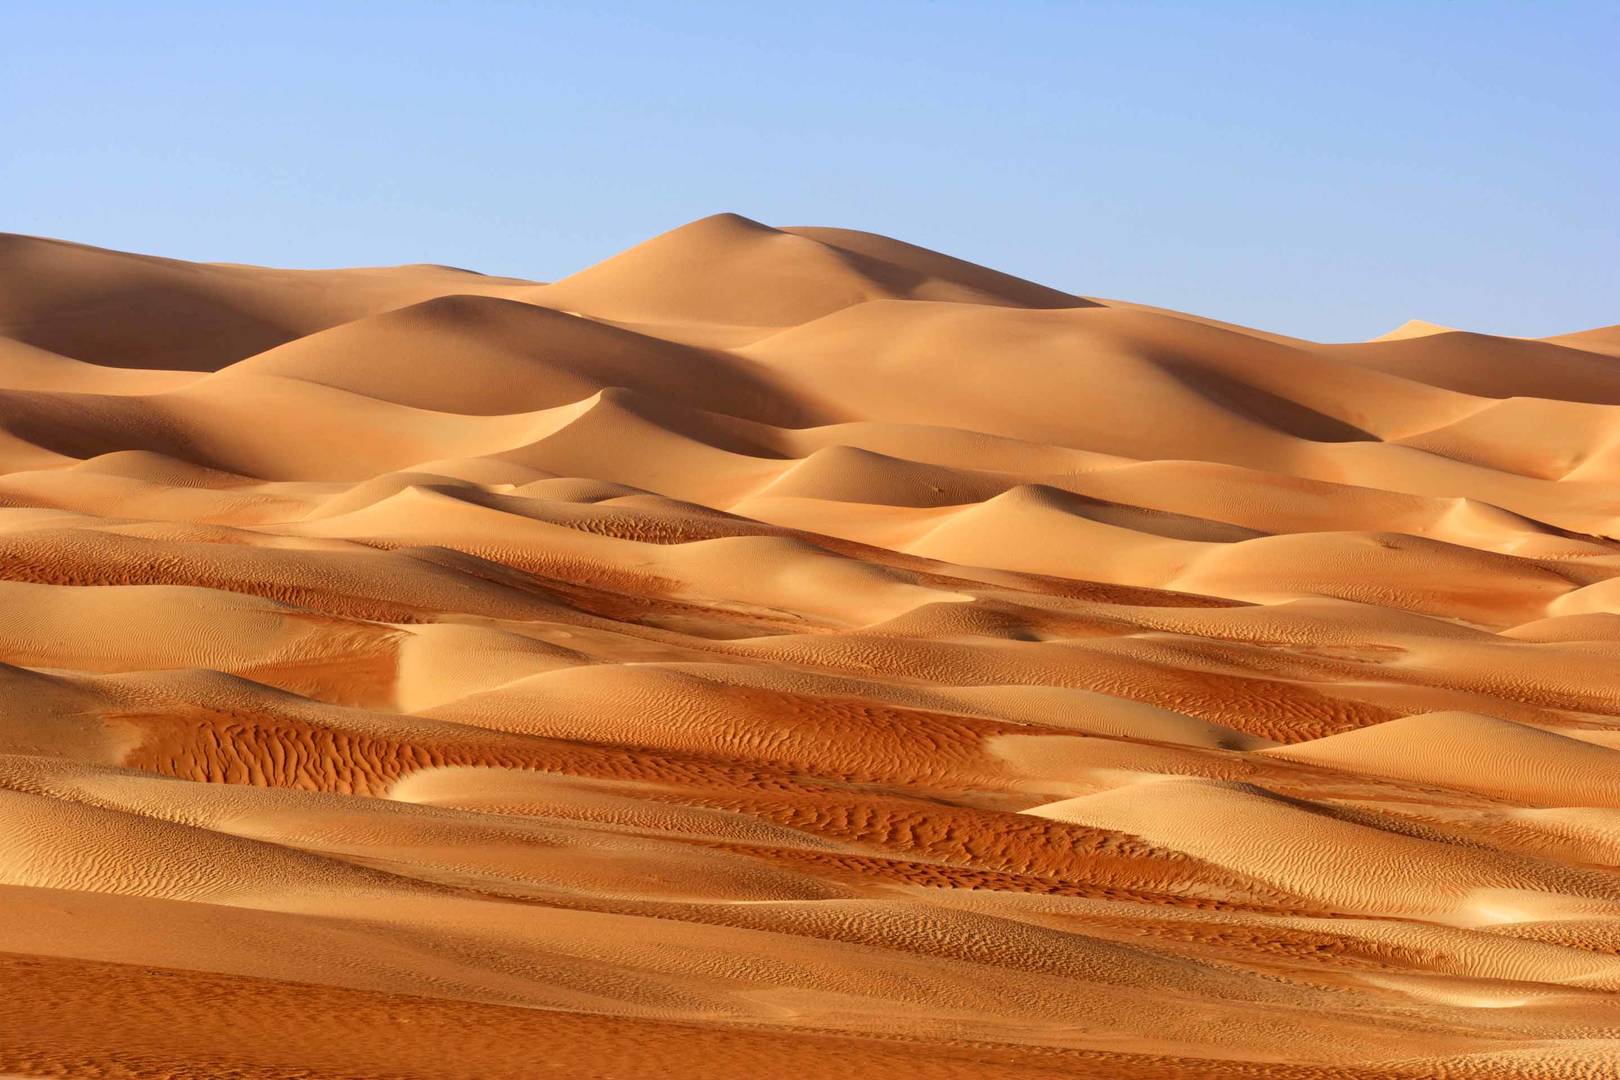 The sand dunes in Oman's Empty Quarter